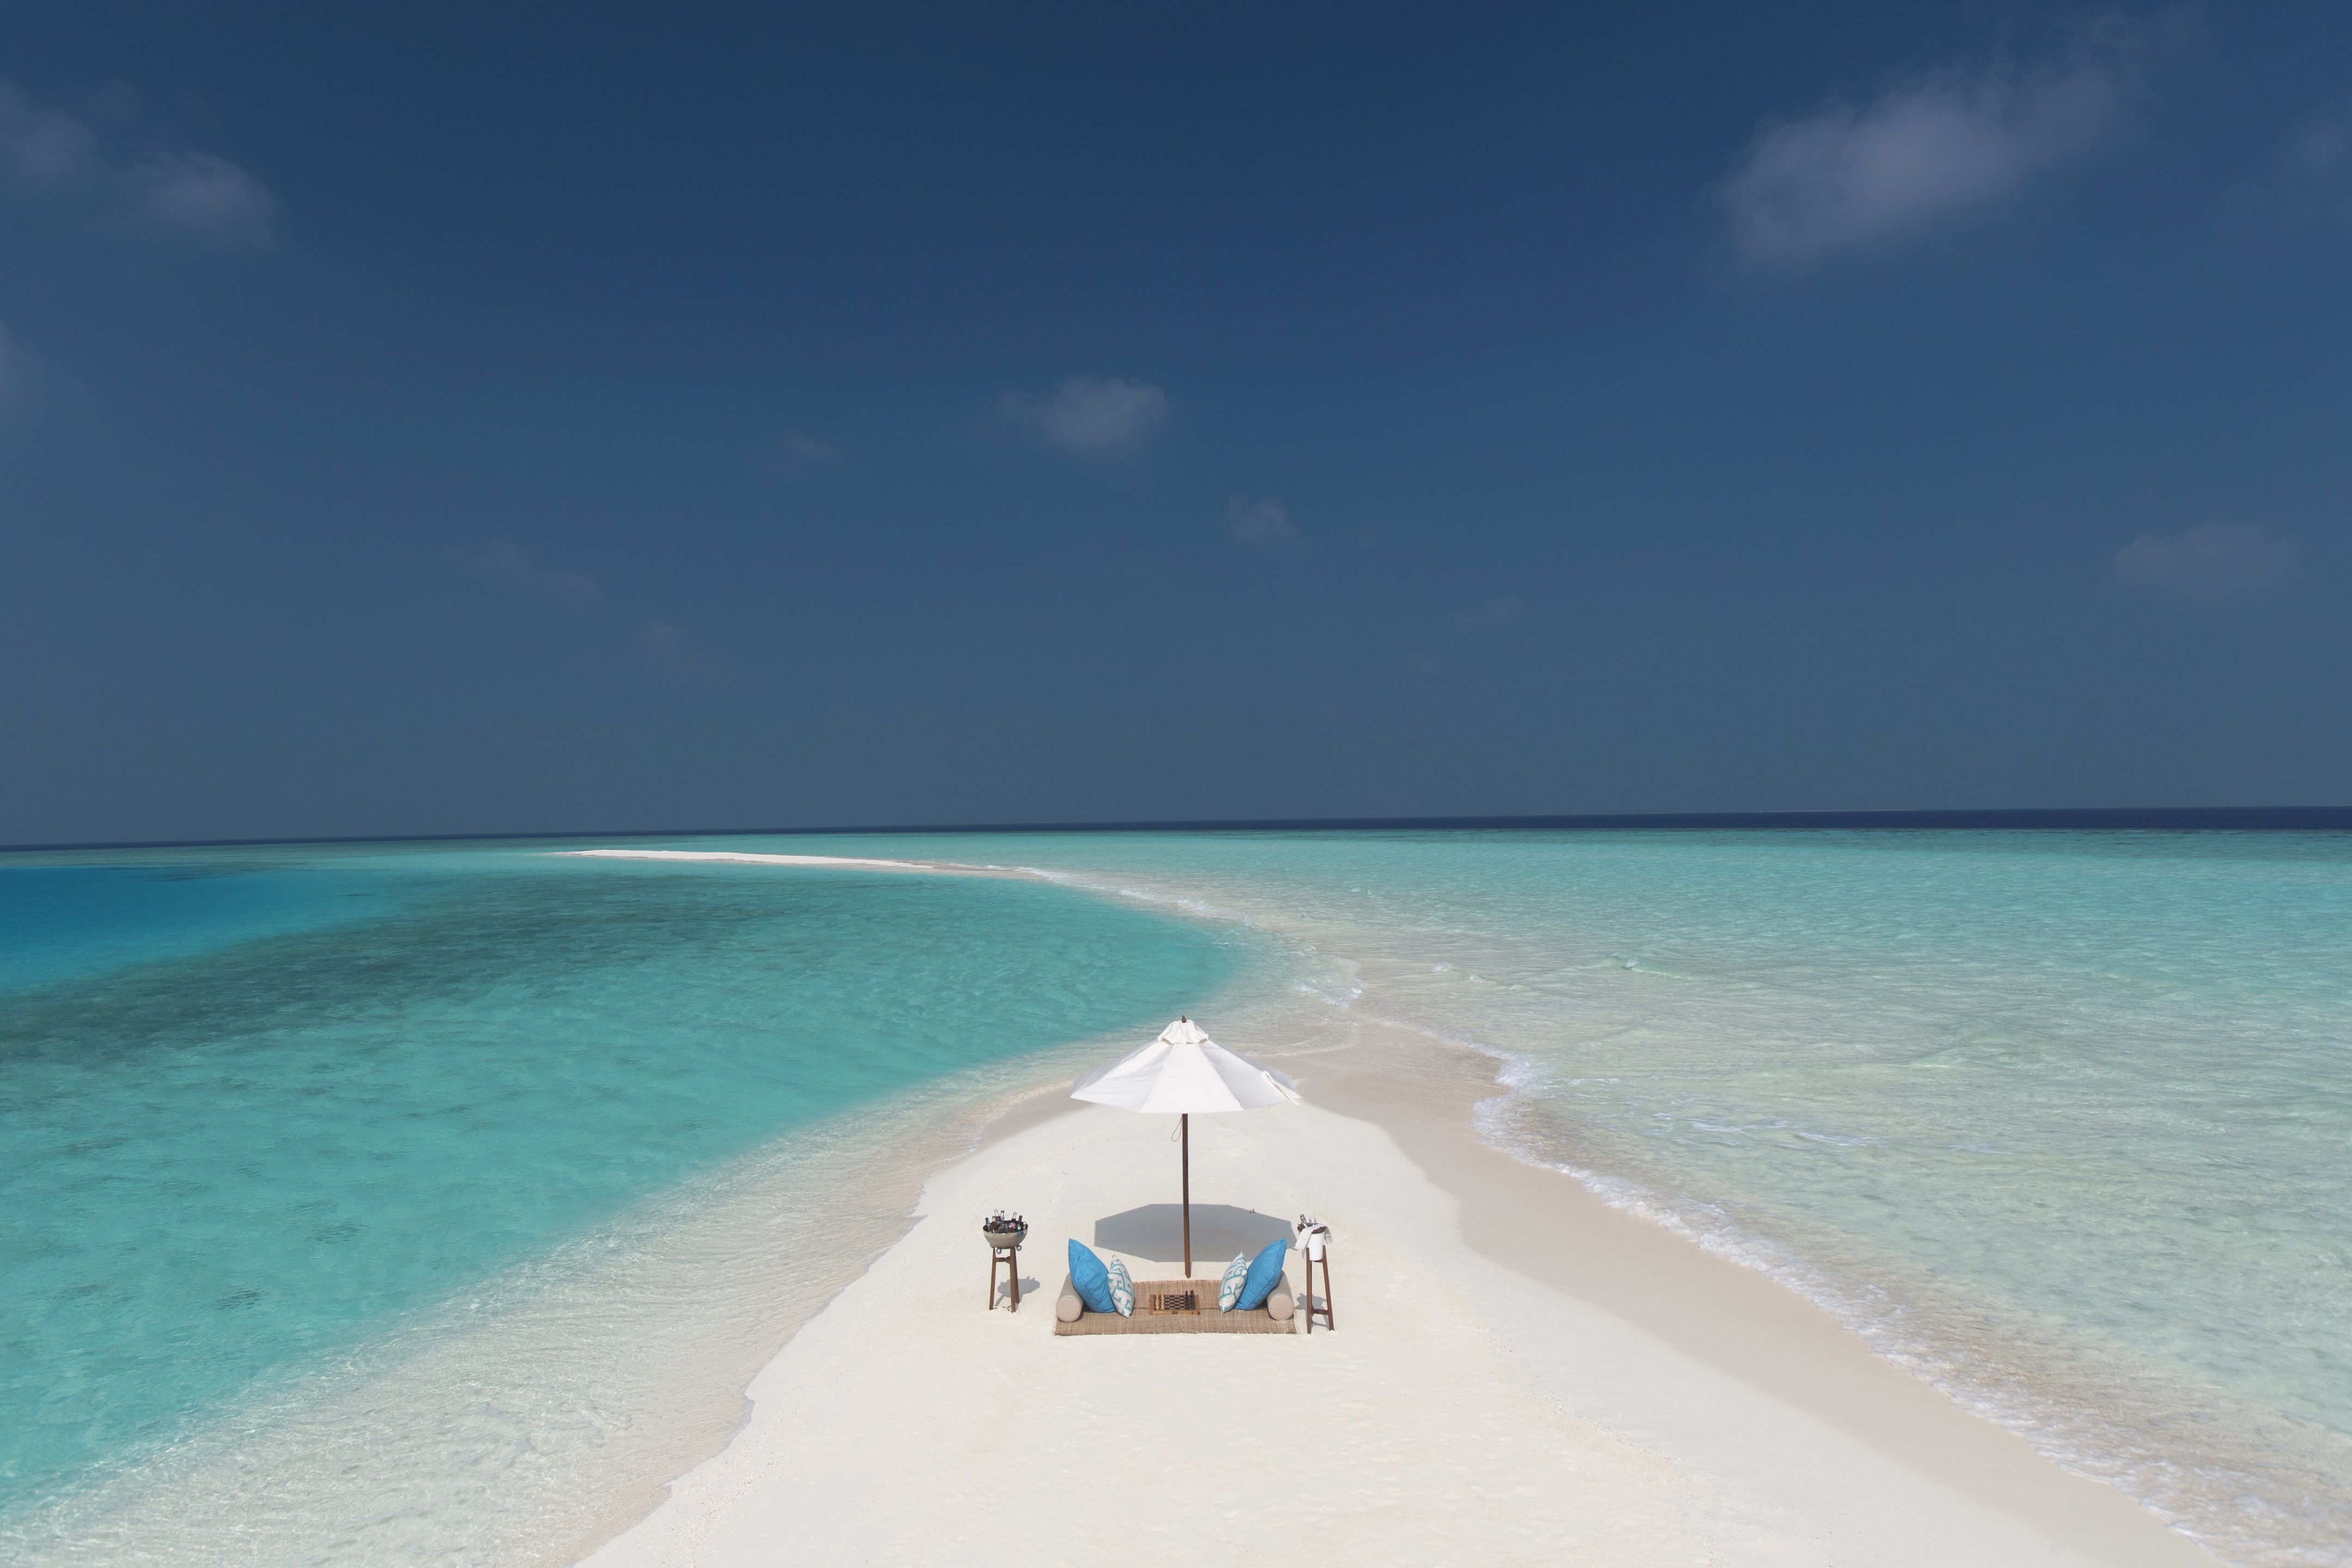 General 4320x2880 nature landscape water sea beach sand Maldives island tropical horizon clear water